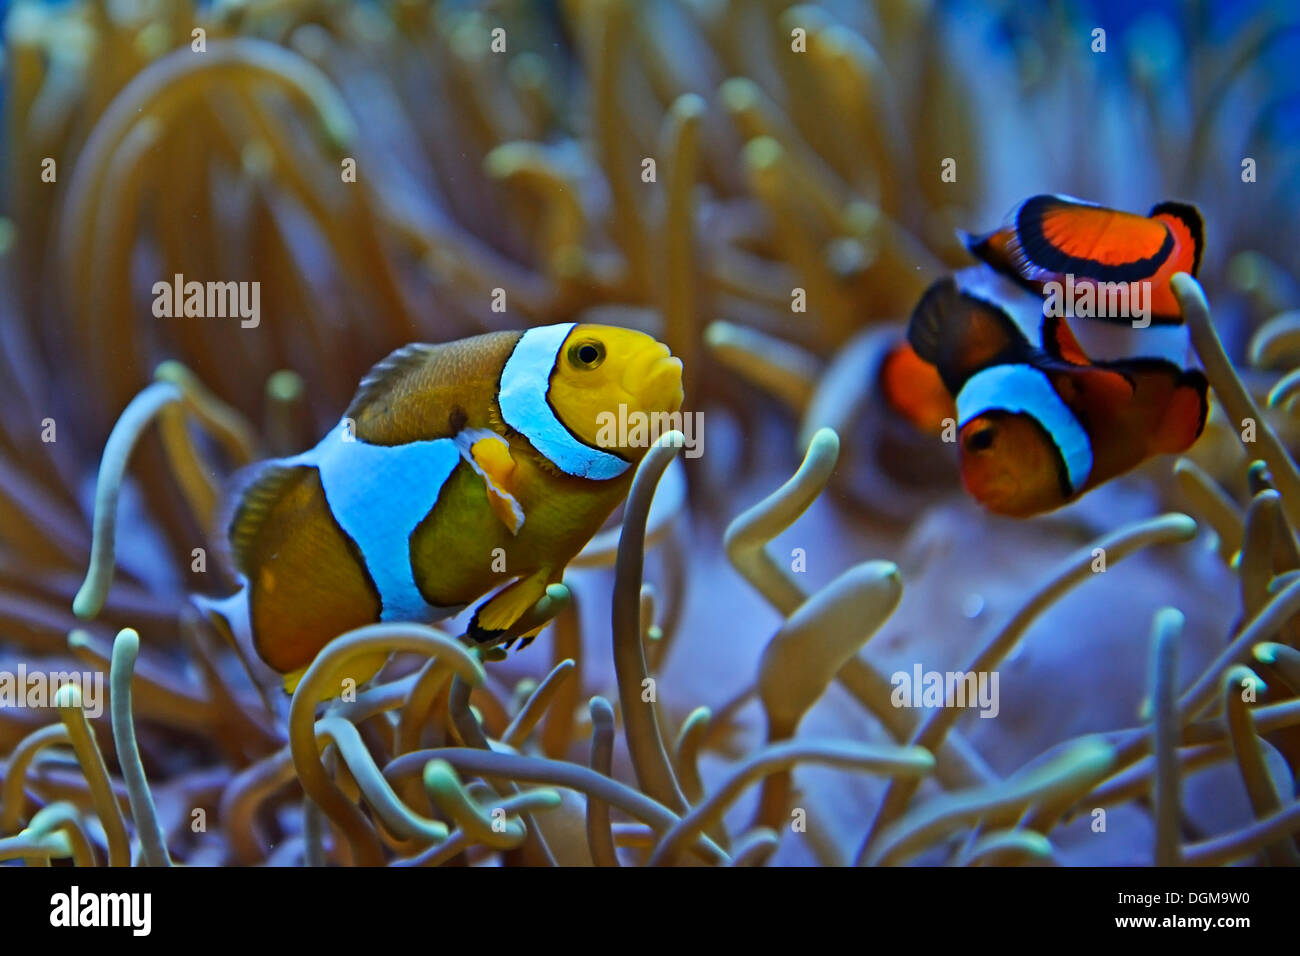 Ocellaris Clownfish, Clownfish or False Percula Clownfish (Amphiprion ocellaris), 'Nemo', living in symbiosis with anemone Stock Photo